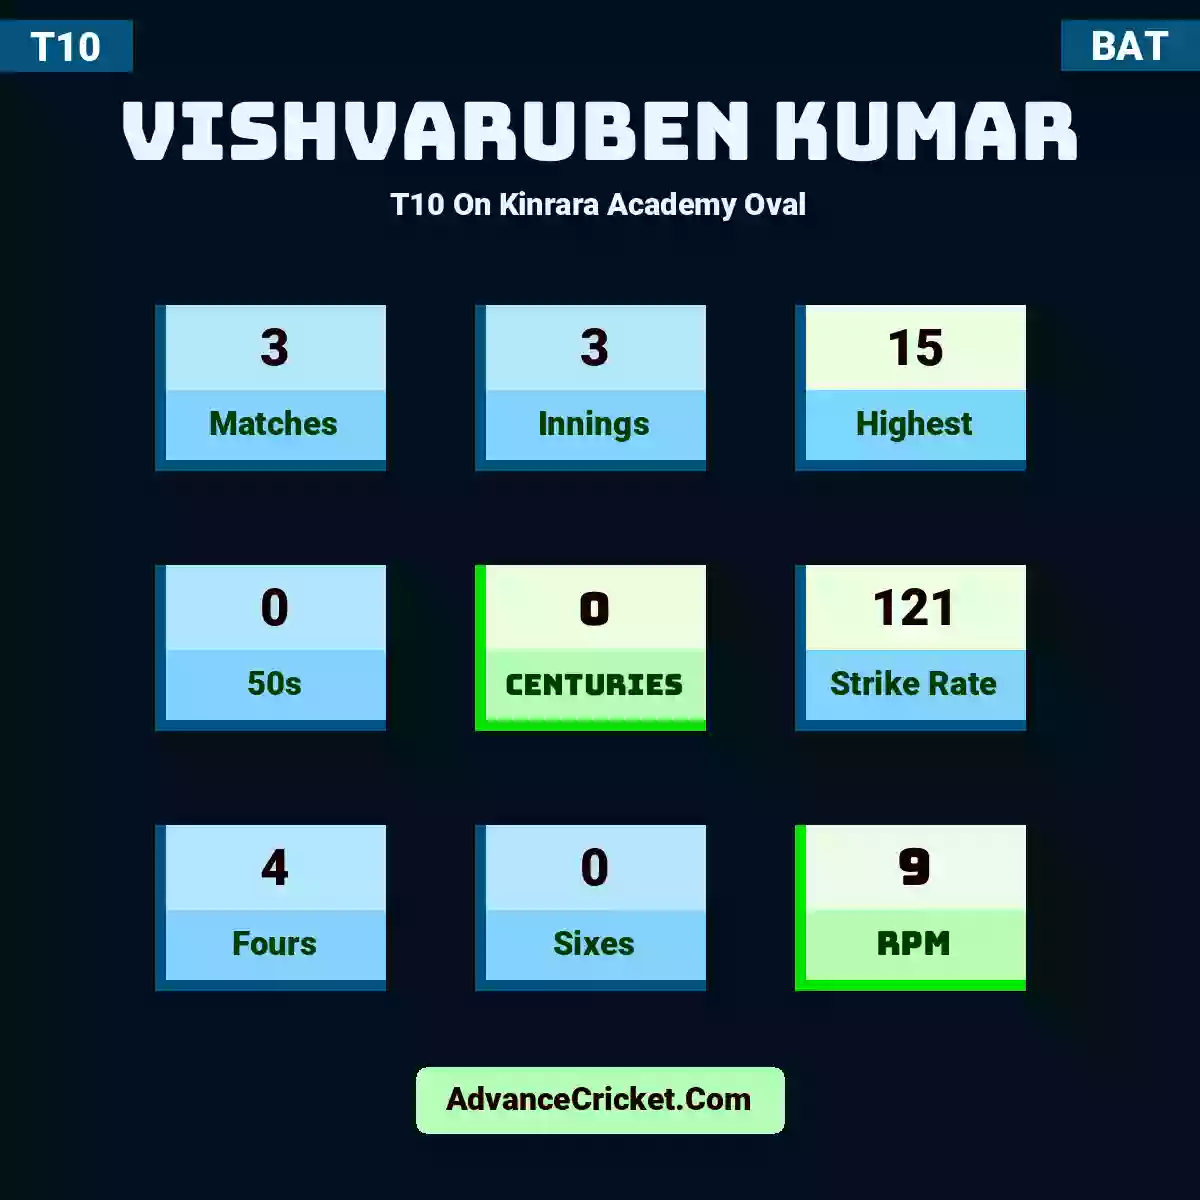 Vishvaruben Kumar T10  On Kinrara Academy Oval, Vishvaruben Kumar played 3 matches, scored 15 runs as highest, 0 half-centuries, and 0 centuries, with a strike rate of 121. V.Kumar hit 4 fours and 0 sixes, with an RPM of 9.